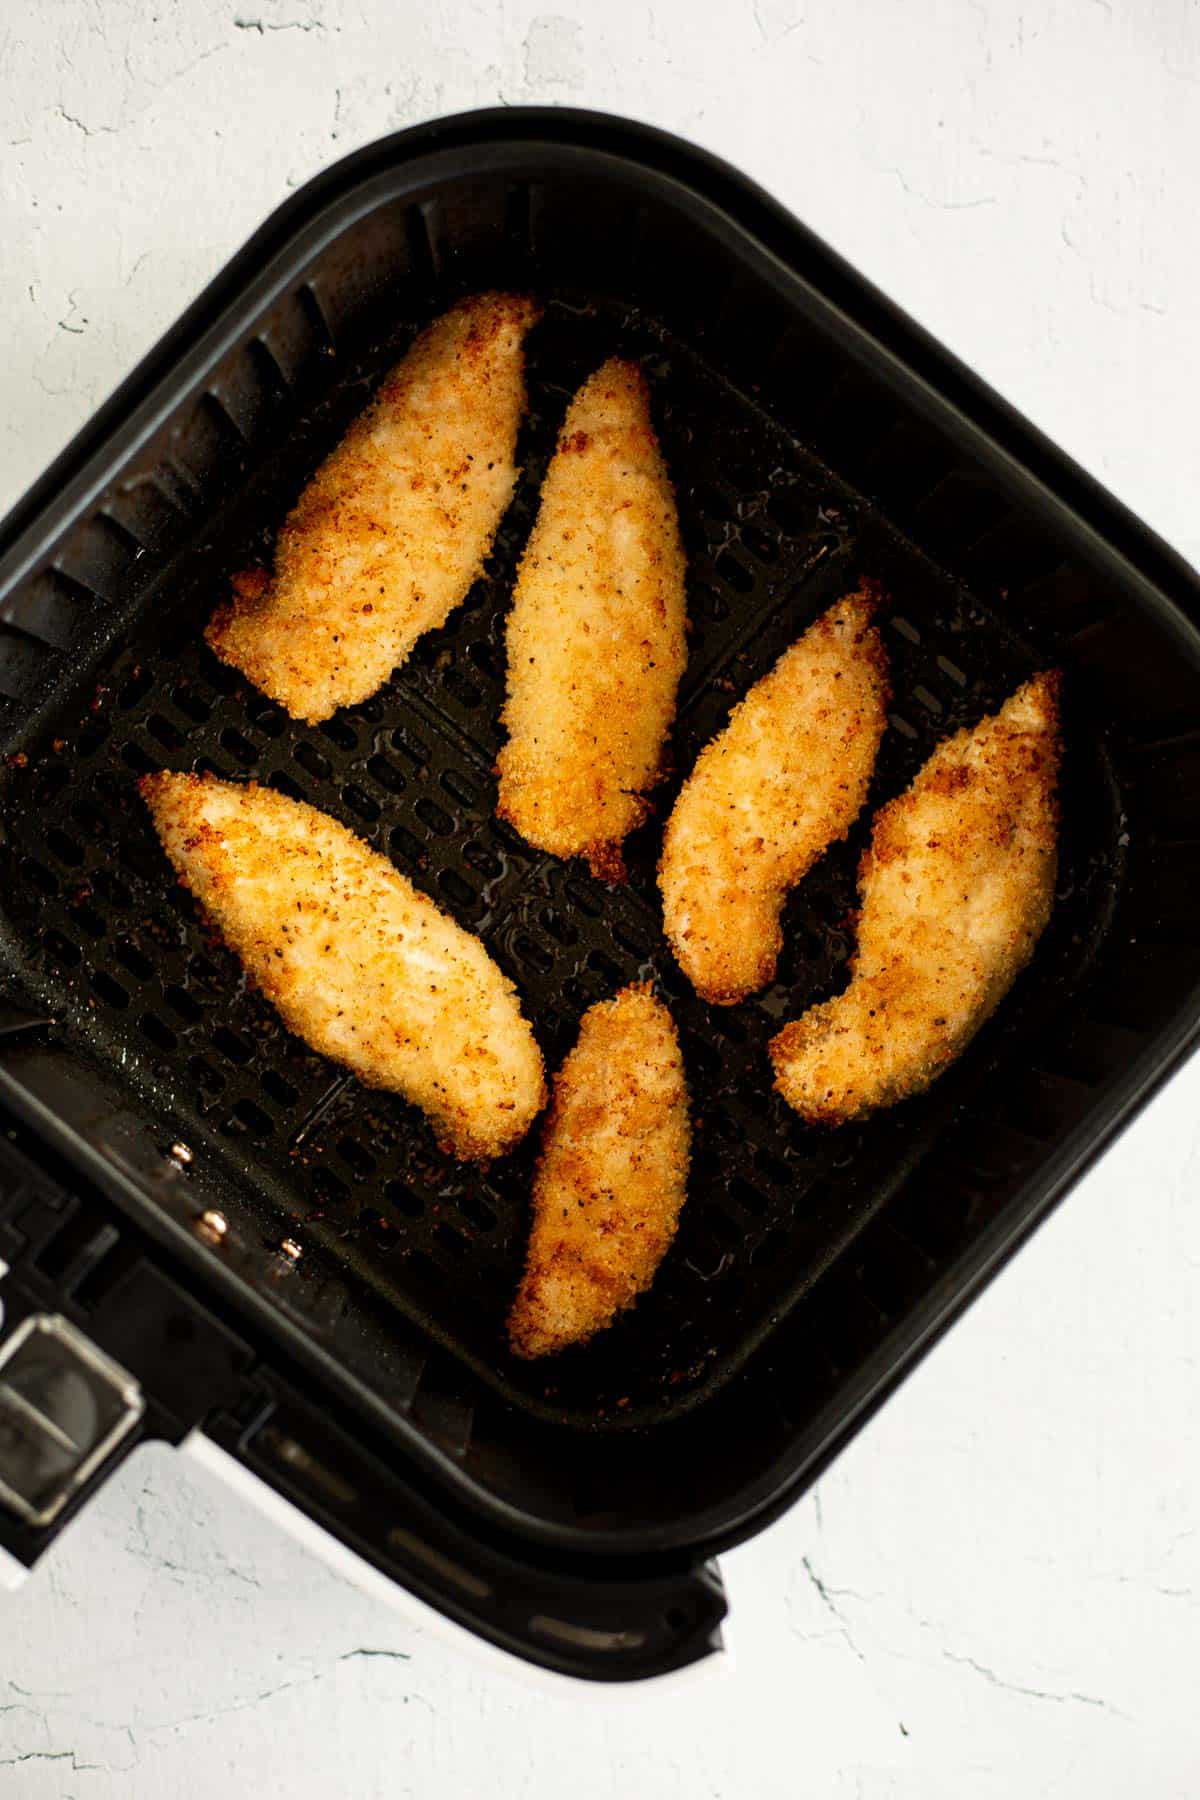 crispy, golden brown chicken tenders in air fryer basket.